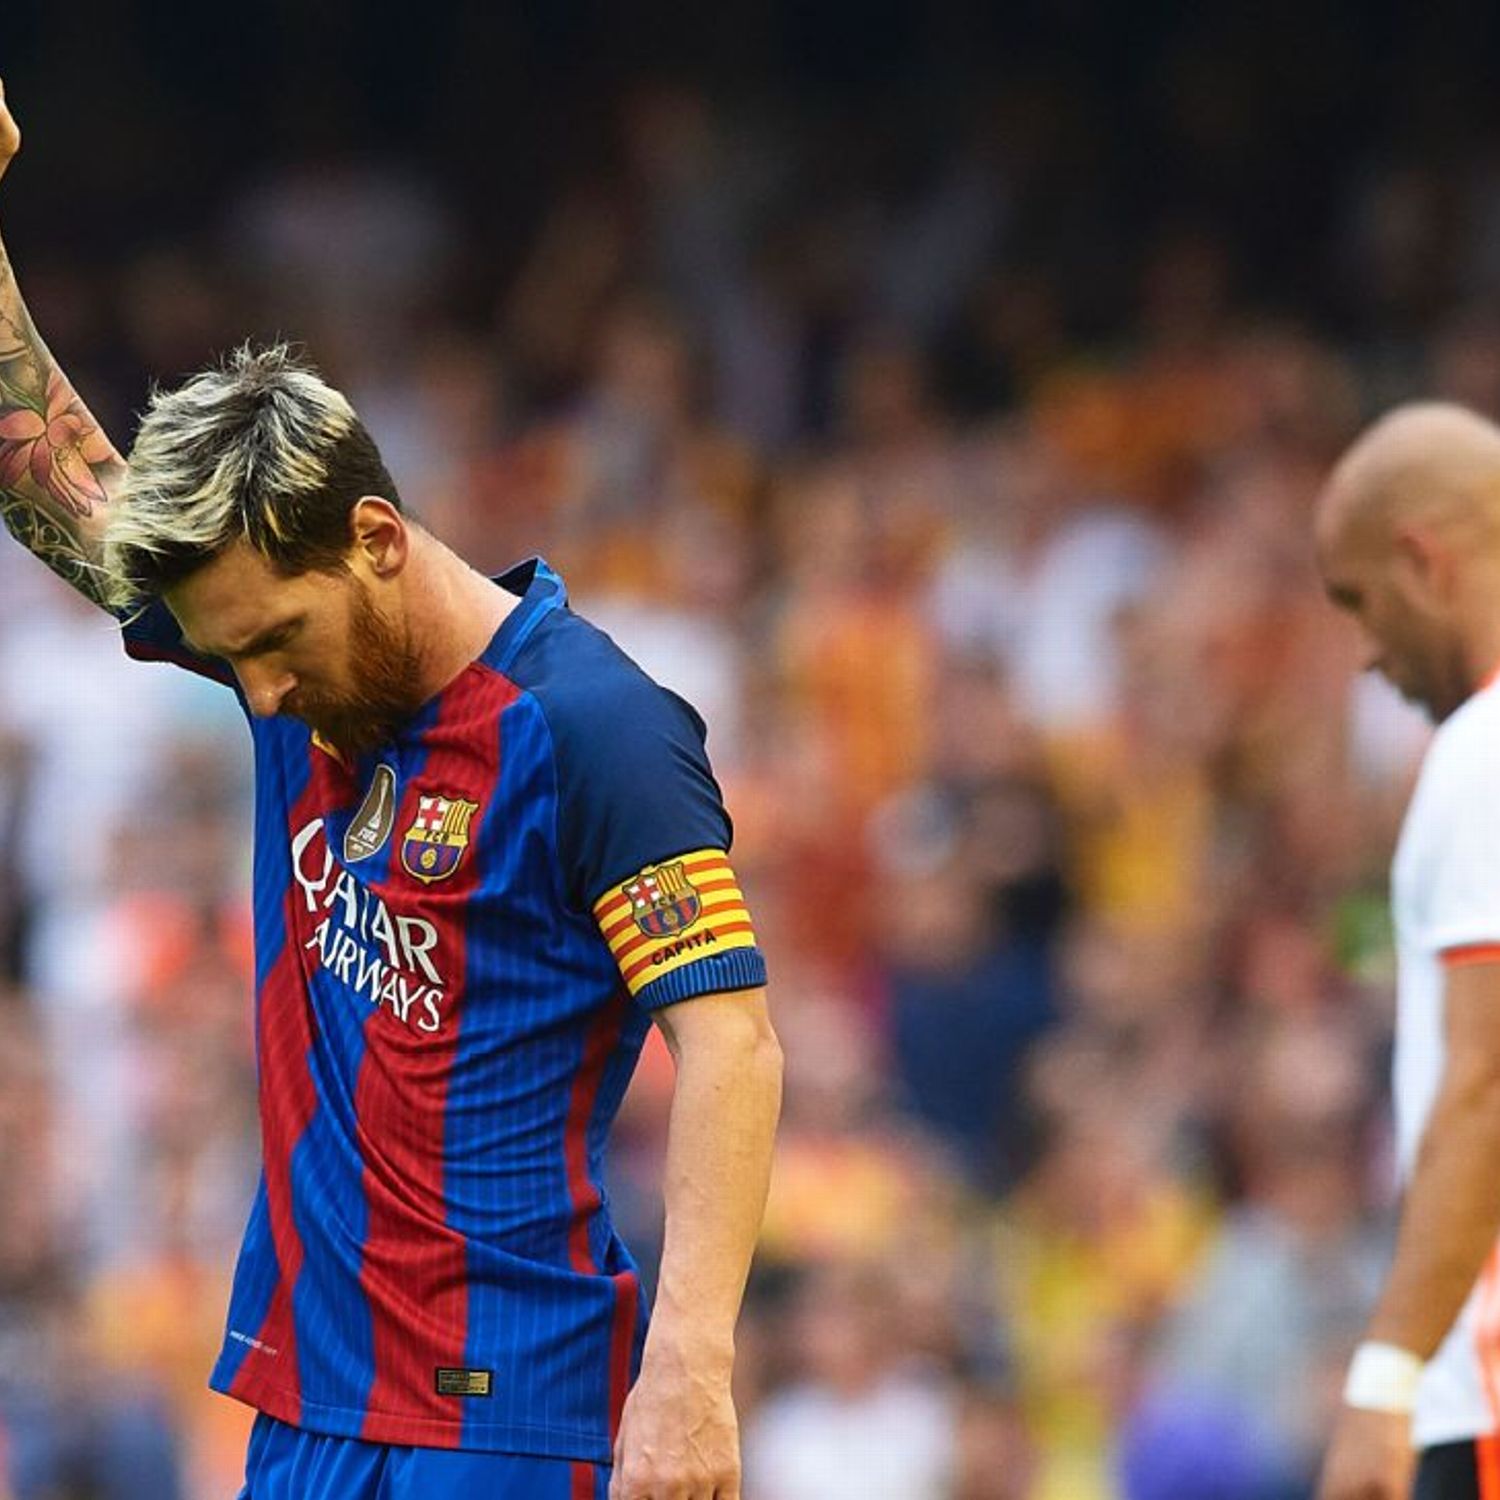 Barcelona's Lionel Messi has X-ray vision - Man City boss Pep Guardiola - ESPN FC